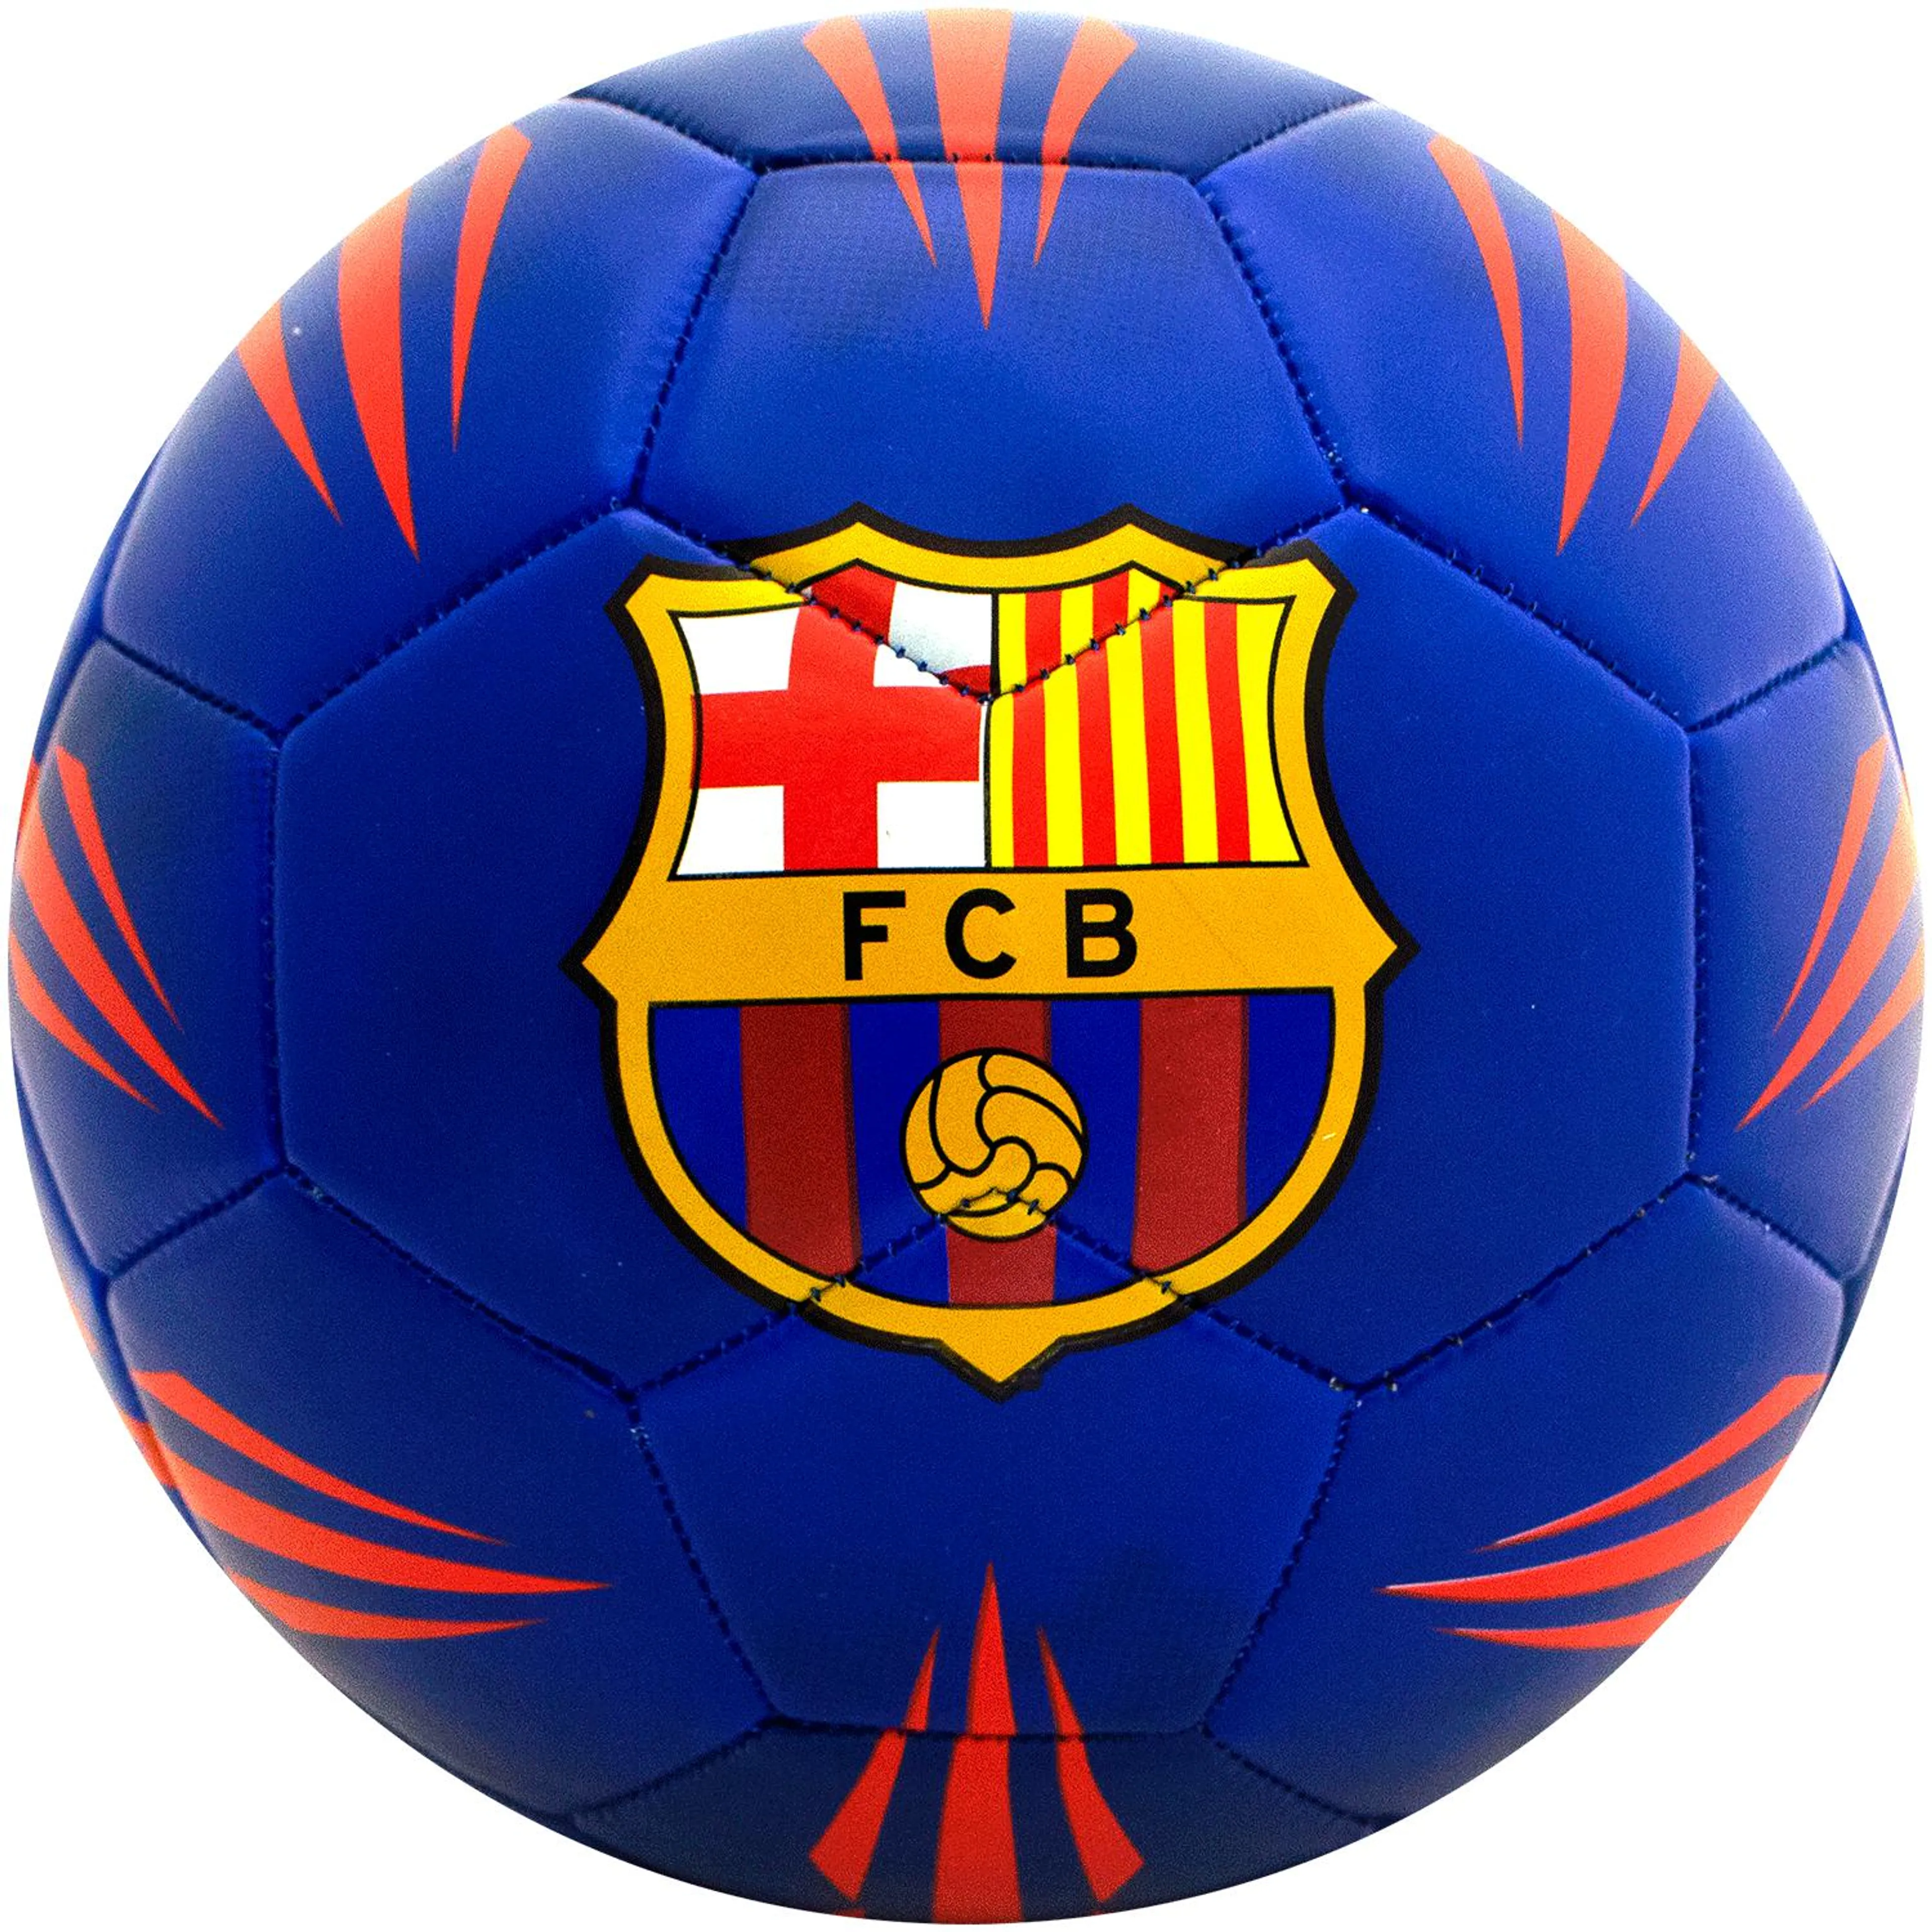 Pelota fútbol Barcelona FC